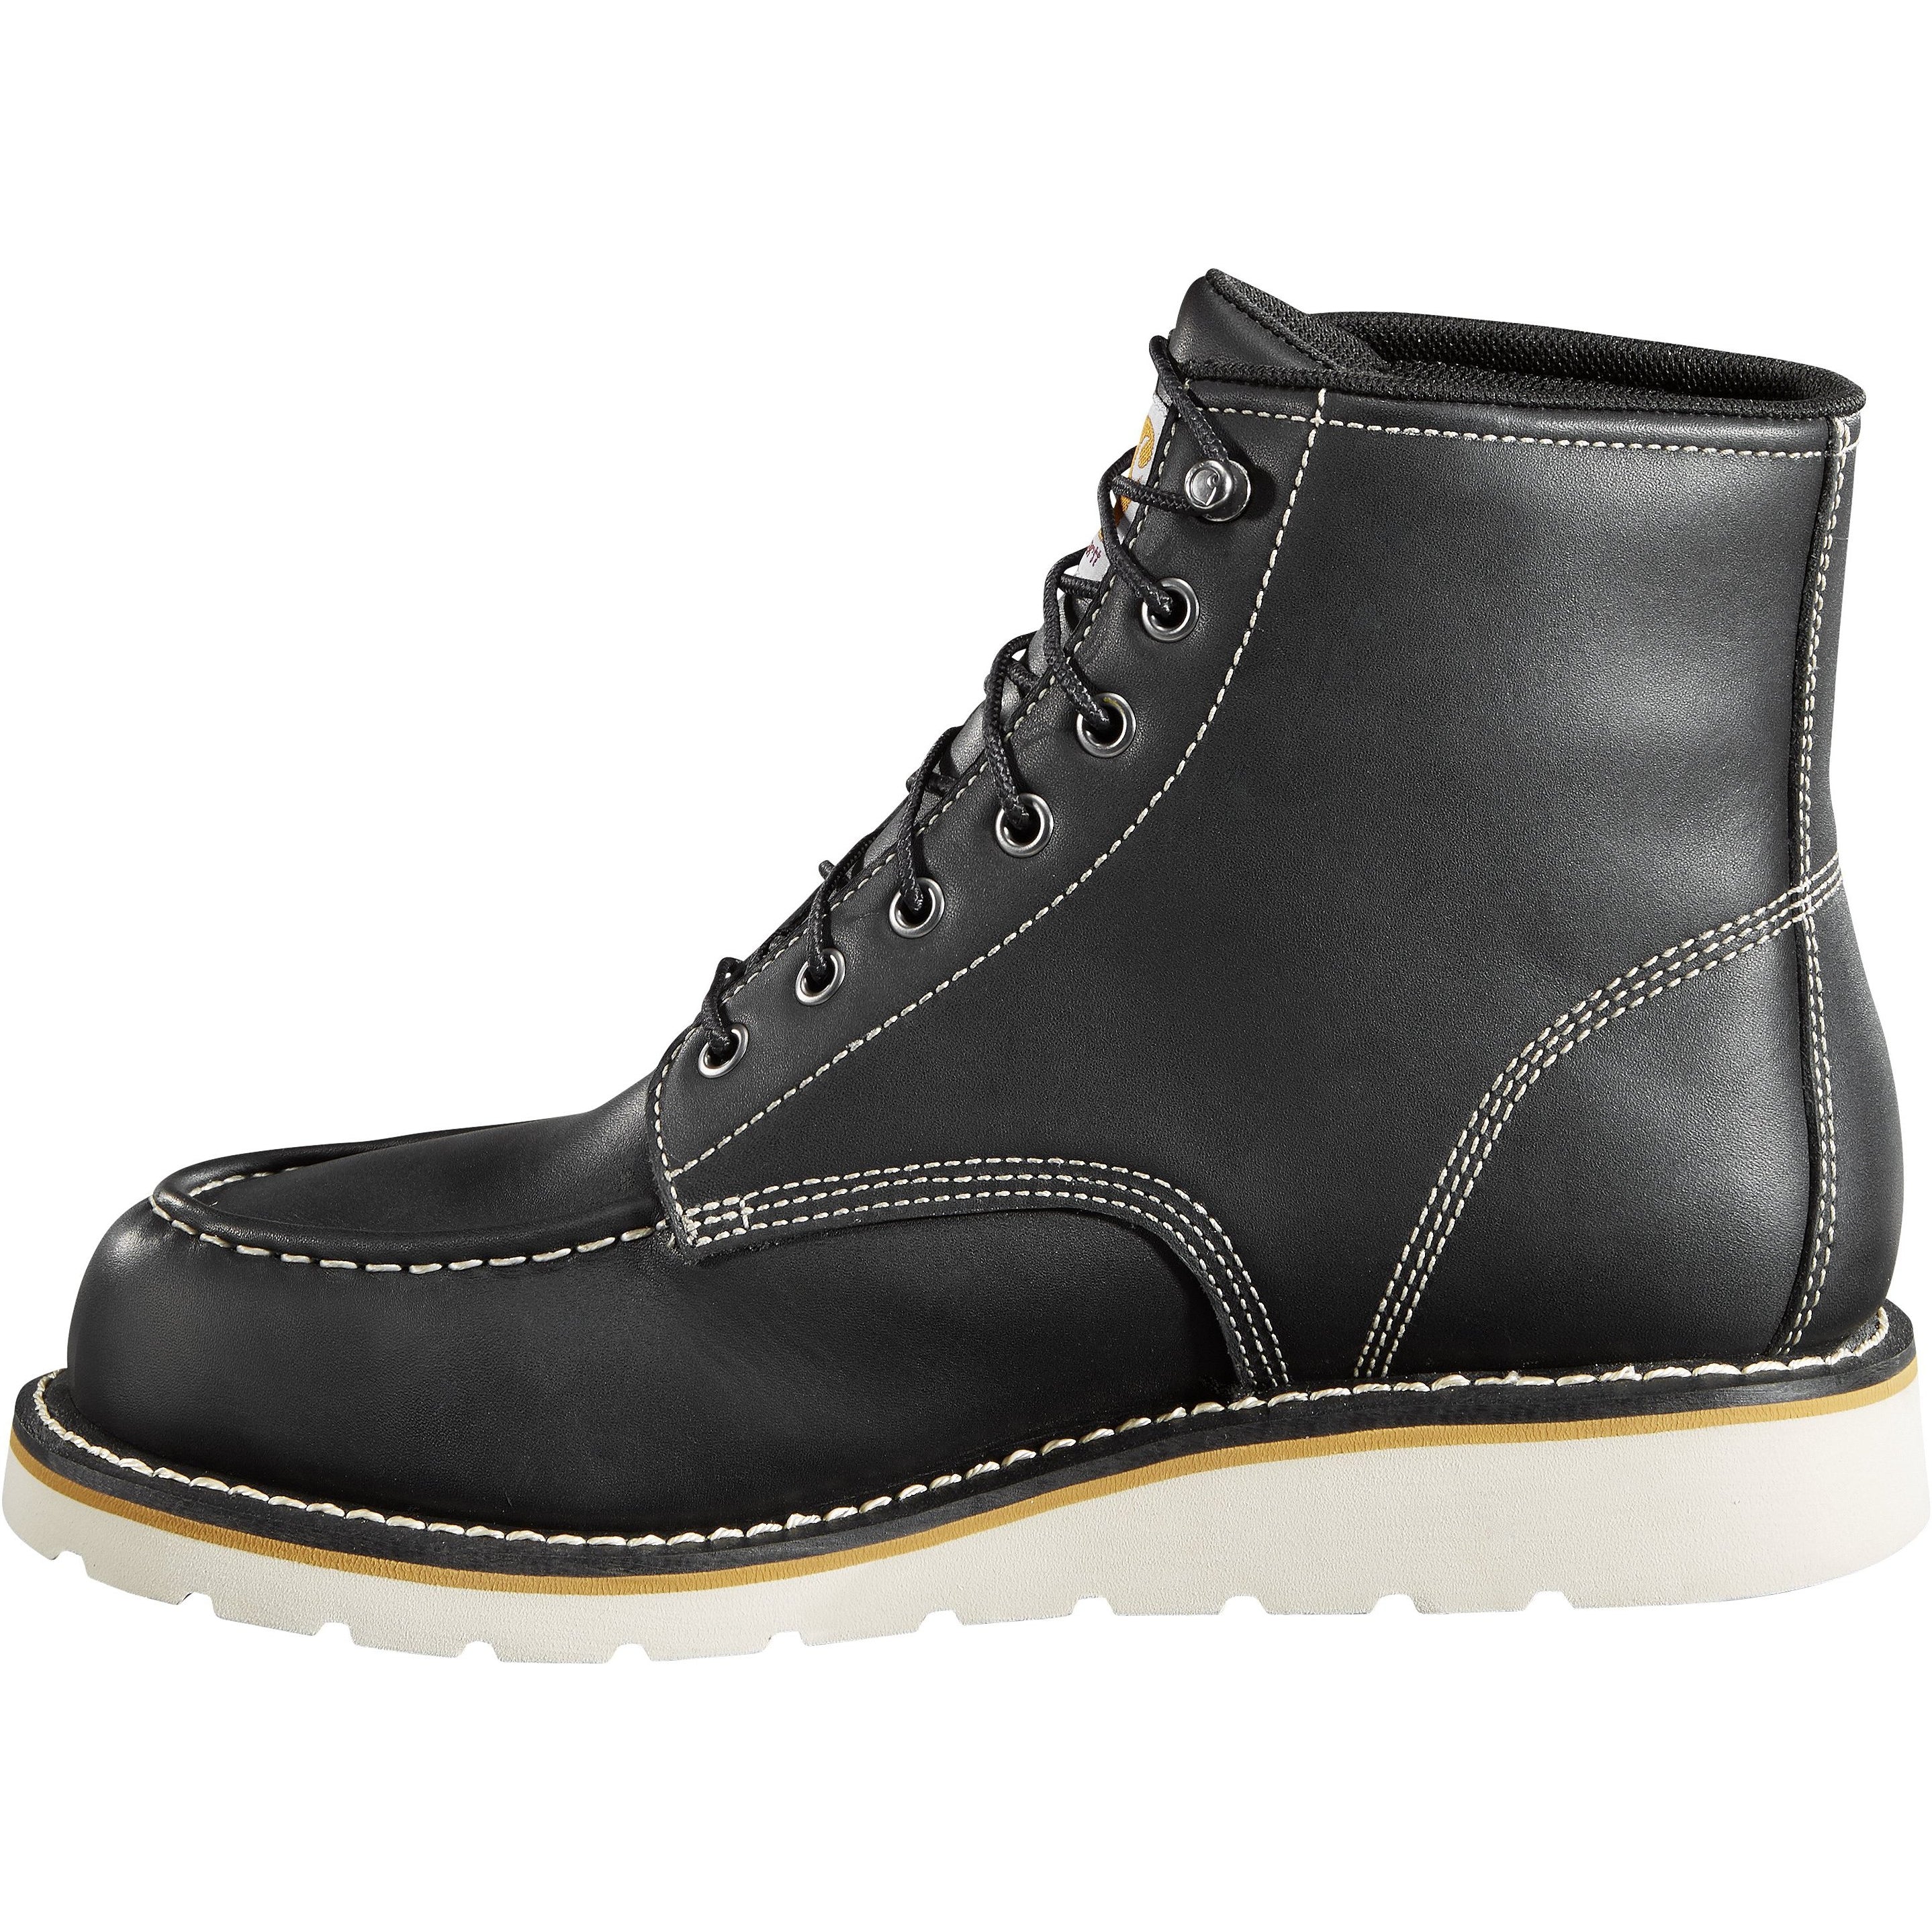 Carhartt Men's 6" Soft Toe WP Wedge Work Boot - Black - CMW6191  - Overlook Boots